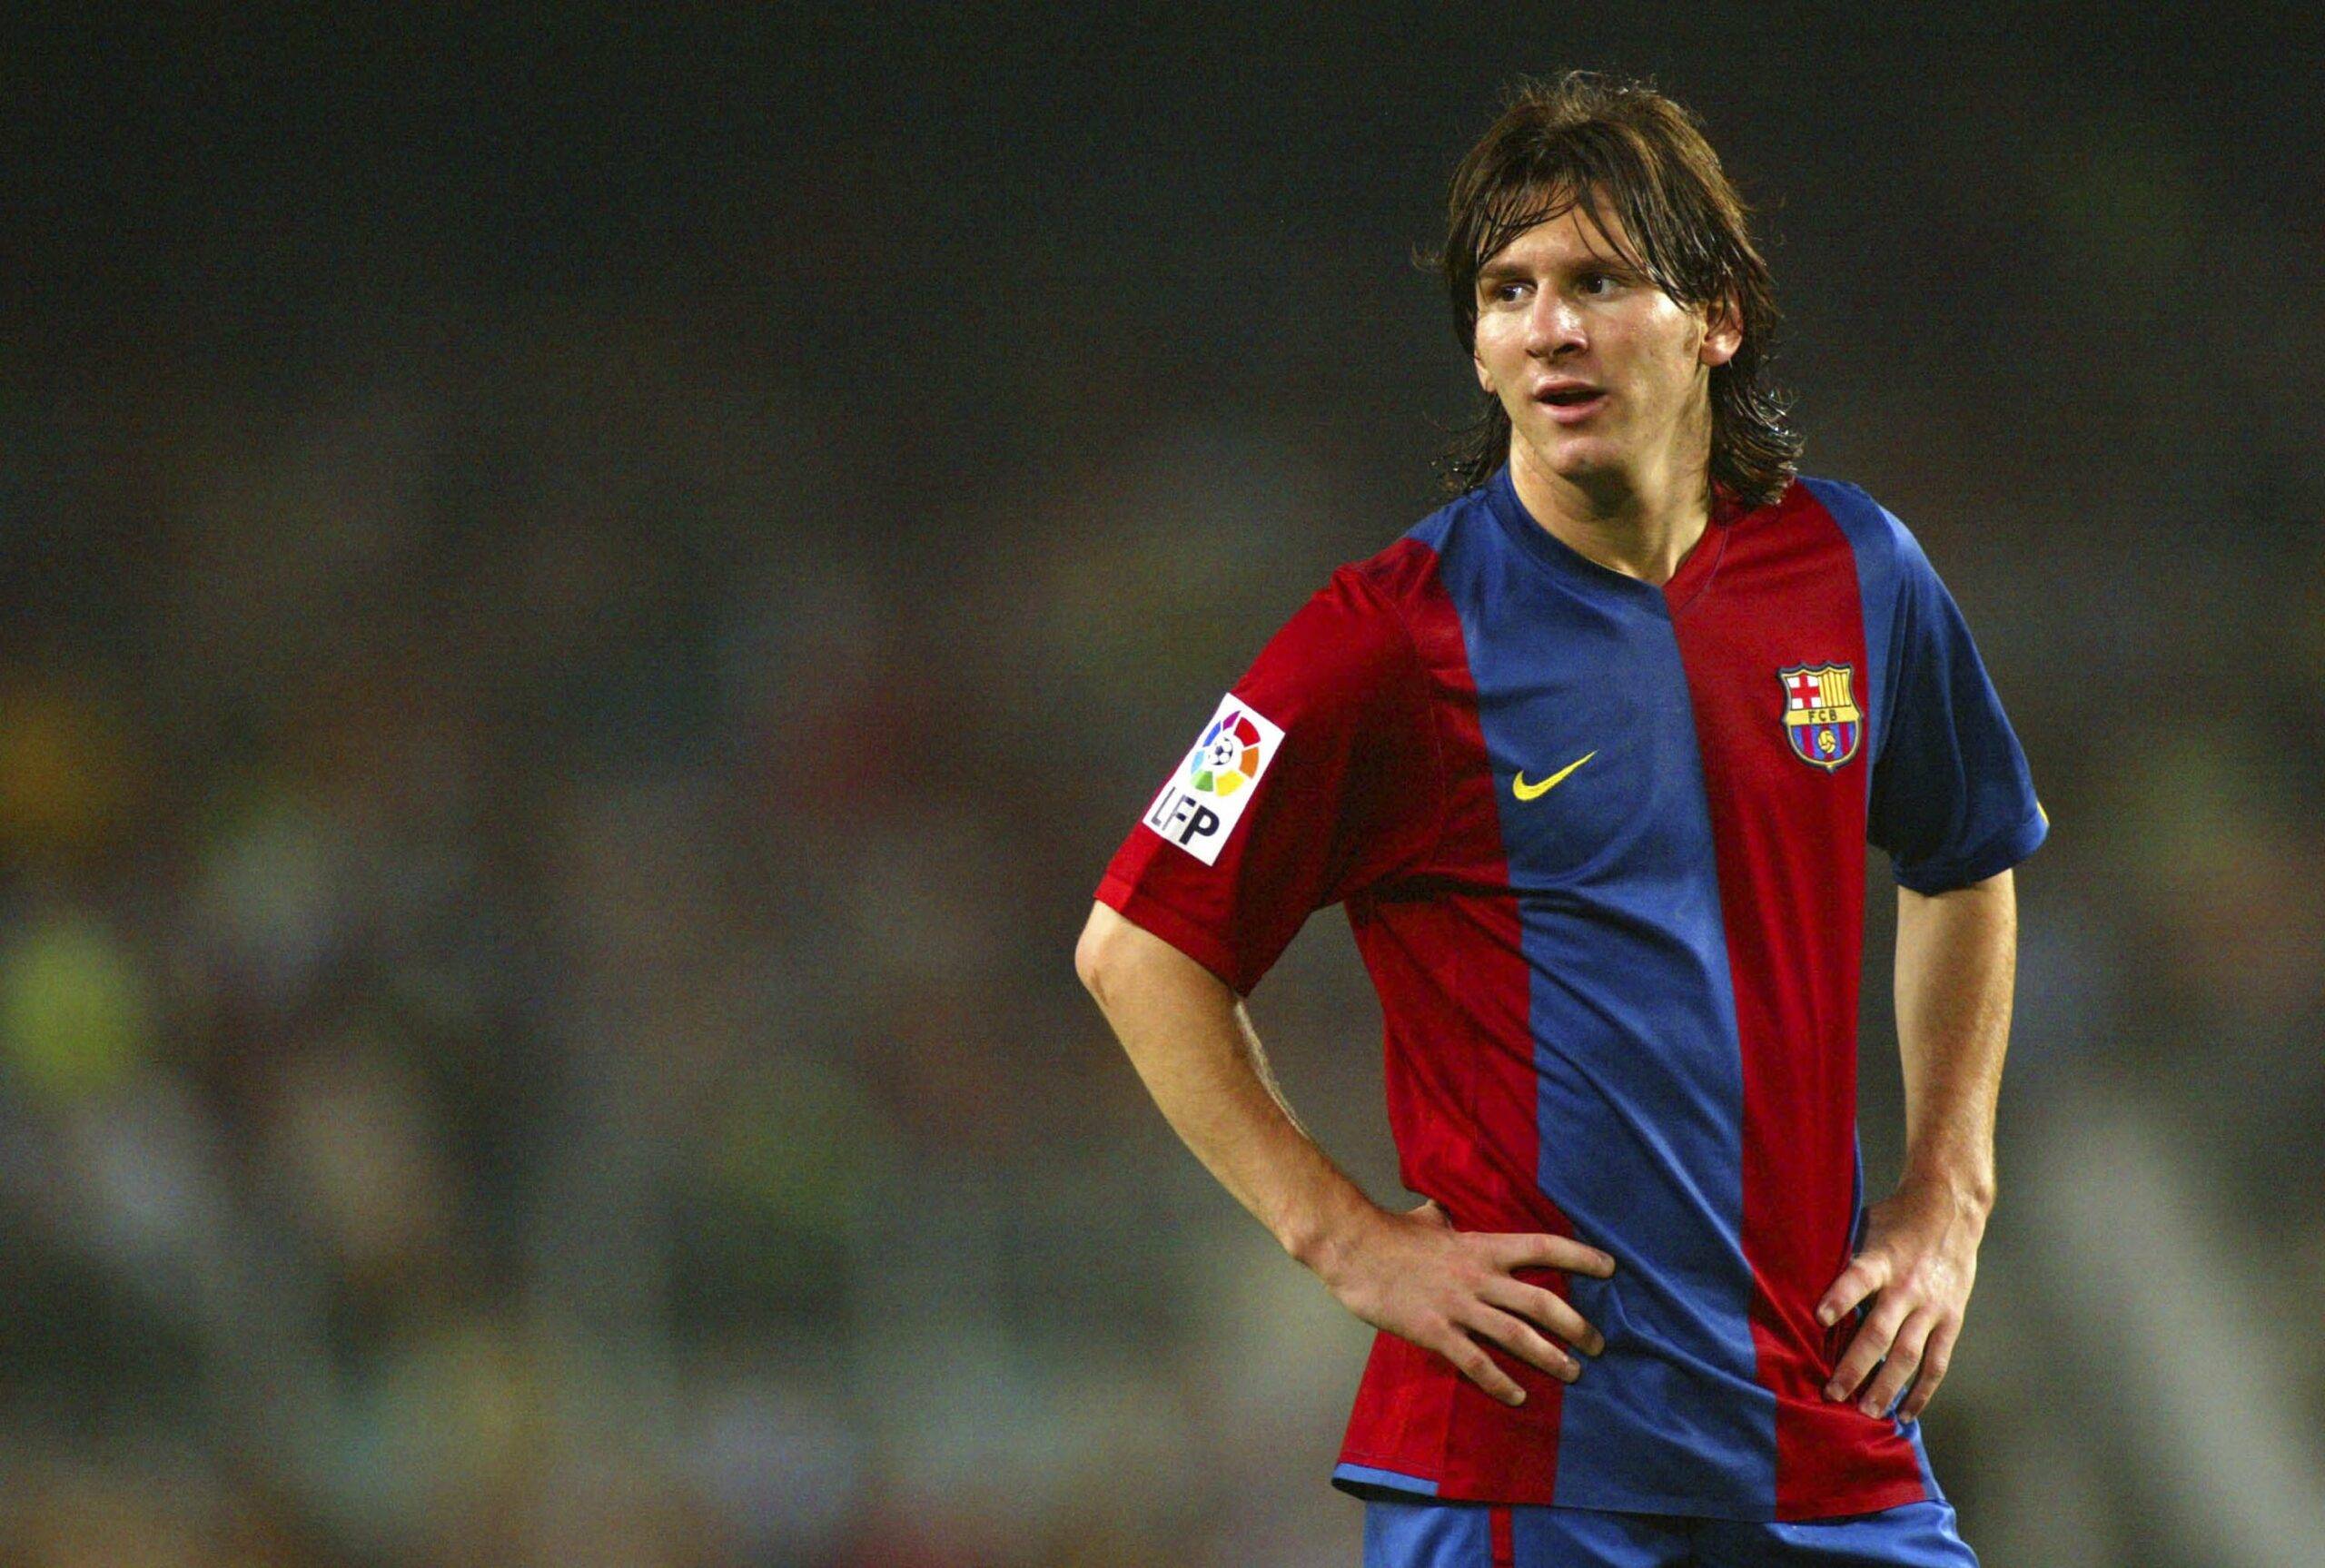 Leo Messi of Barcelona